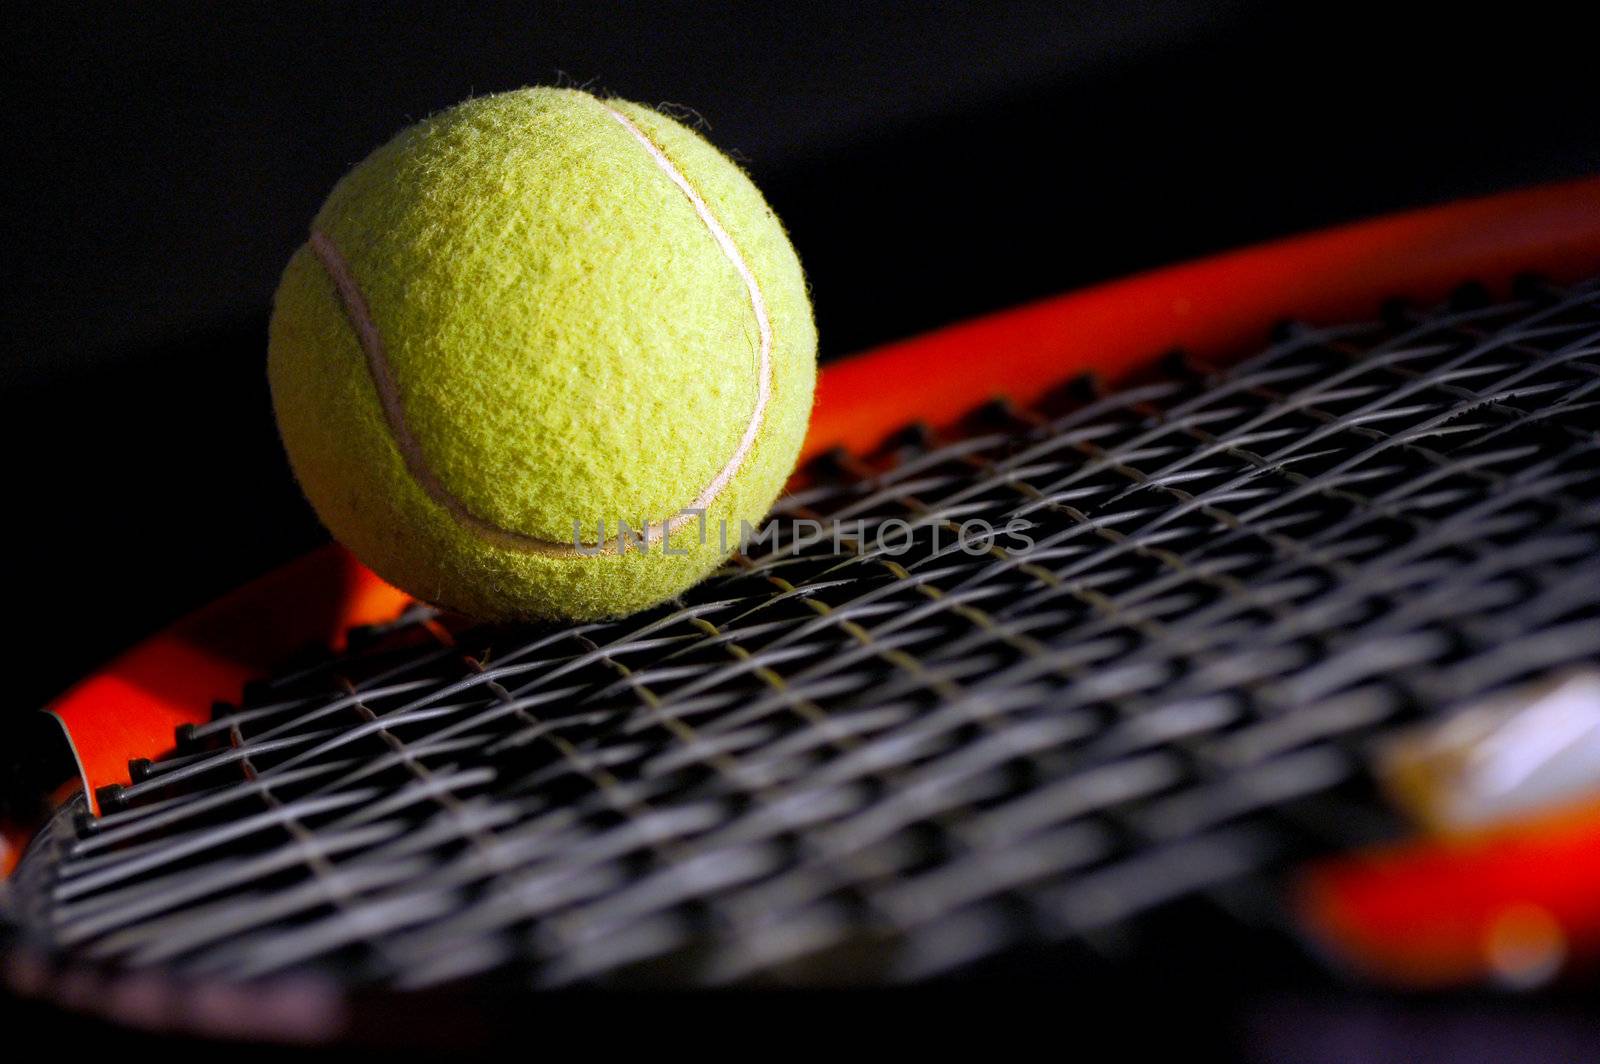 Tennis equipment - ball and racket on black. Soft light, shallow depth of field.